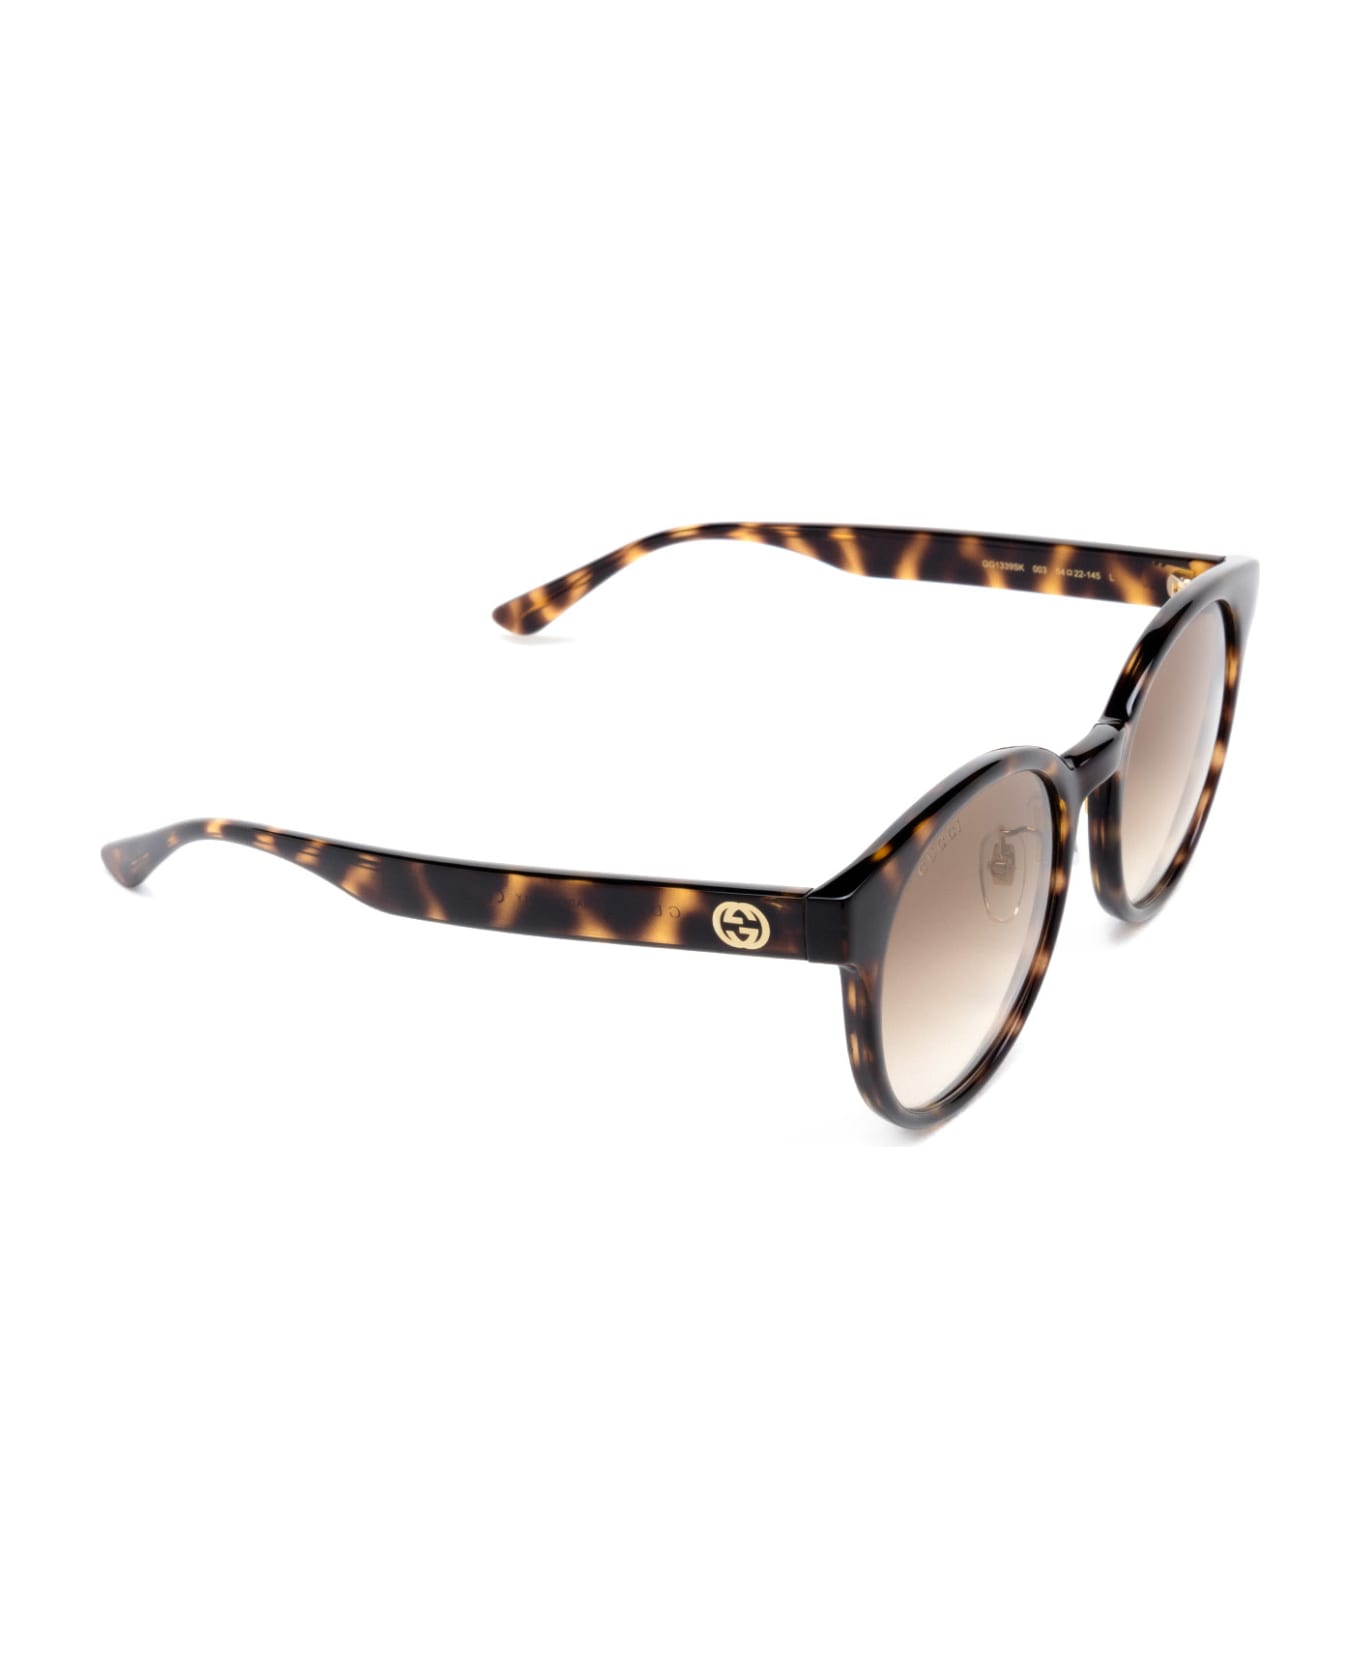 Gucci Eyewear Gg1339sk Havana Sunglasses - Havana